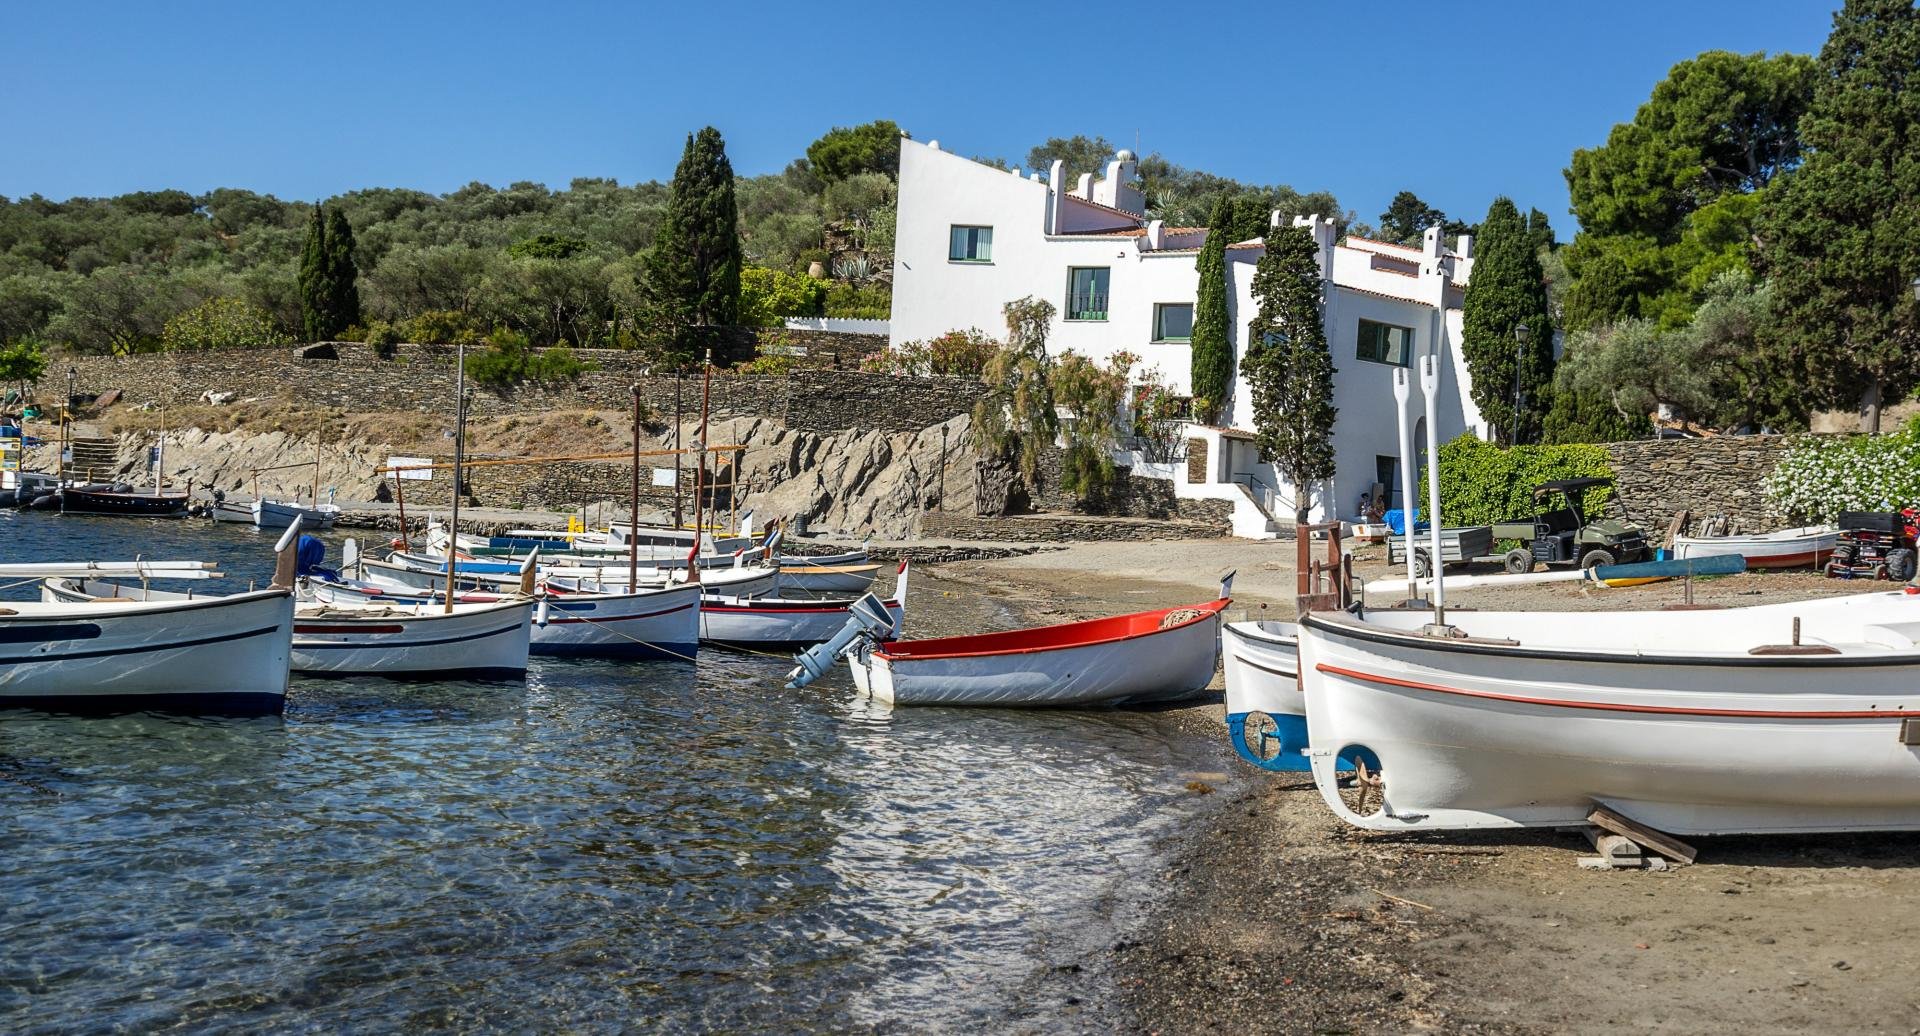 Port lligat in Cadaqués, Spain for holiday rentals in a prestigious house